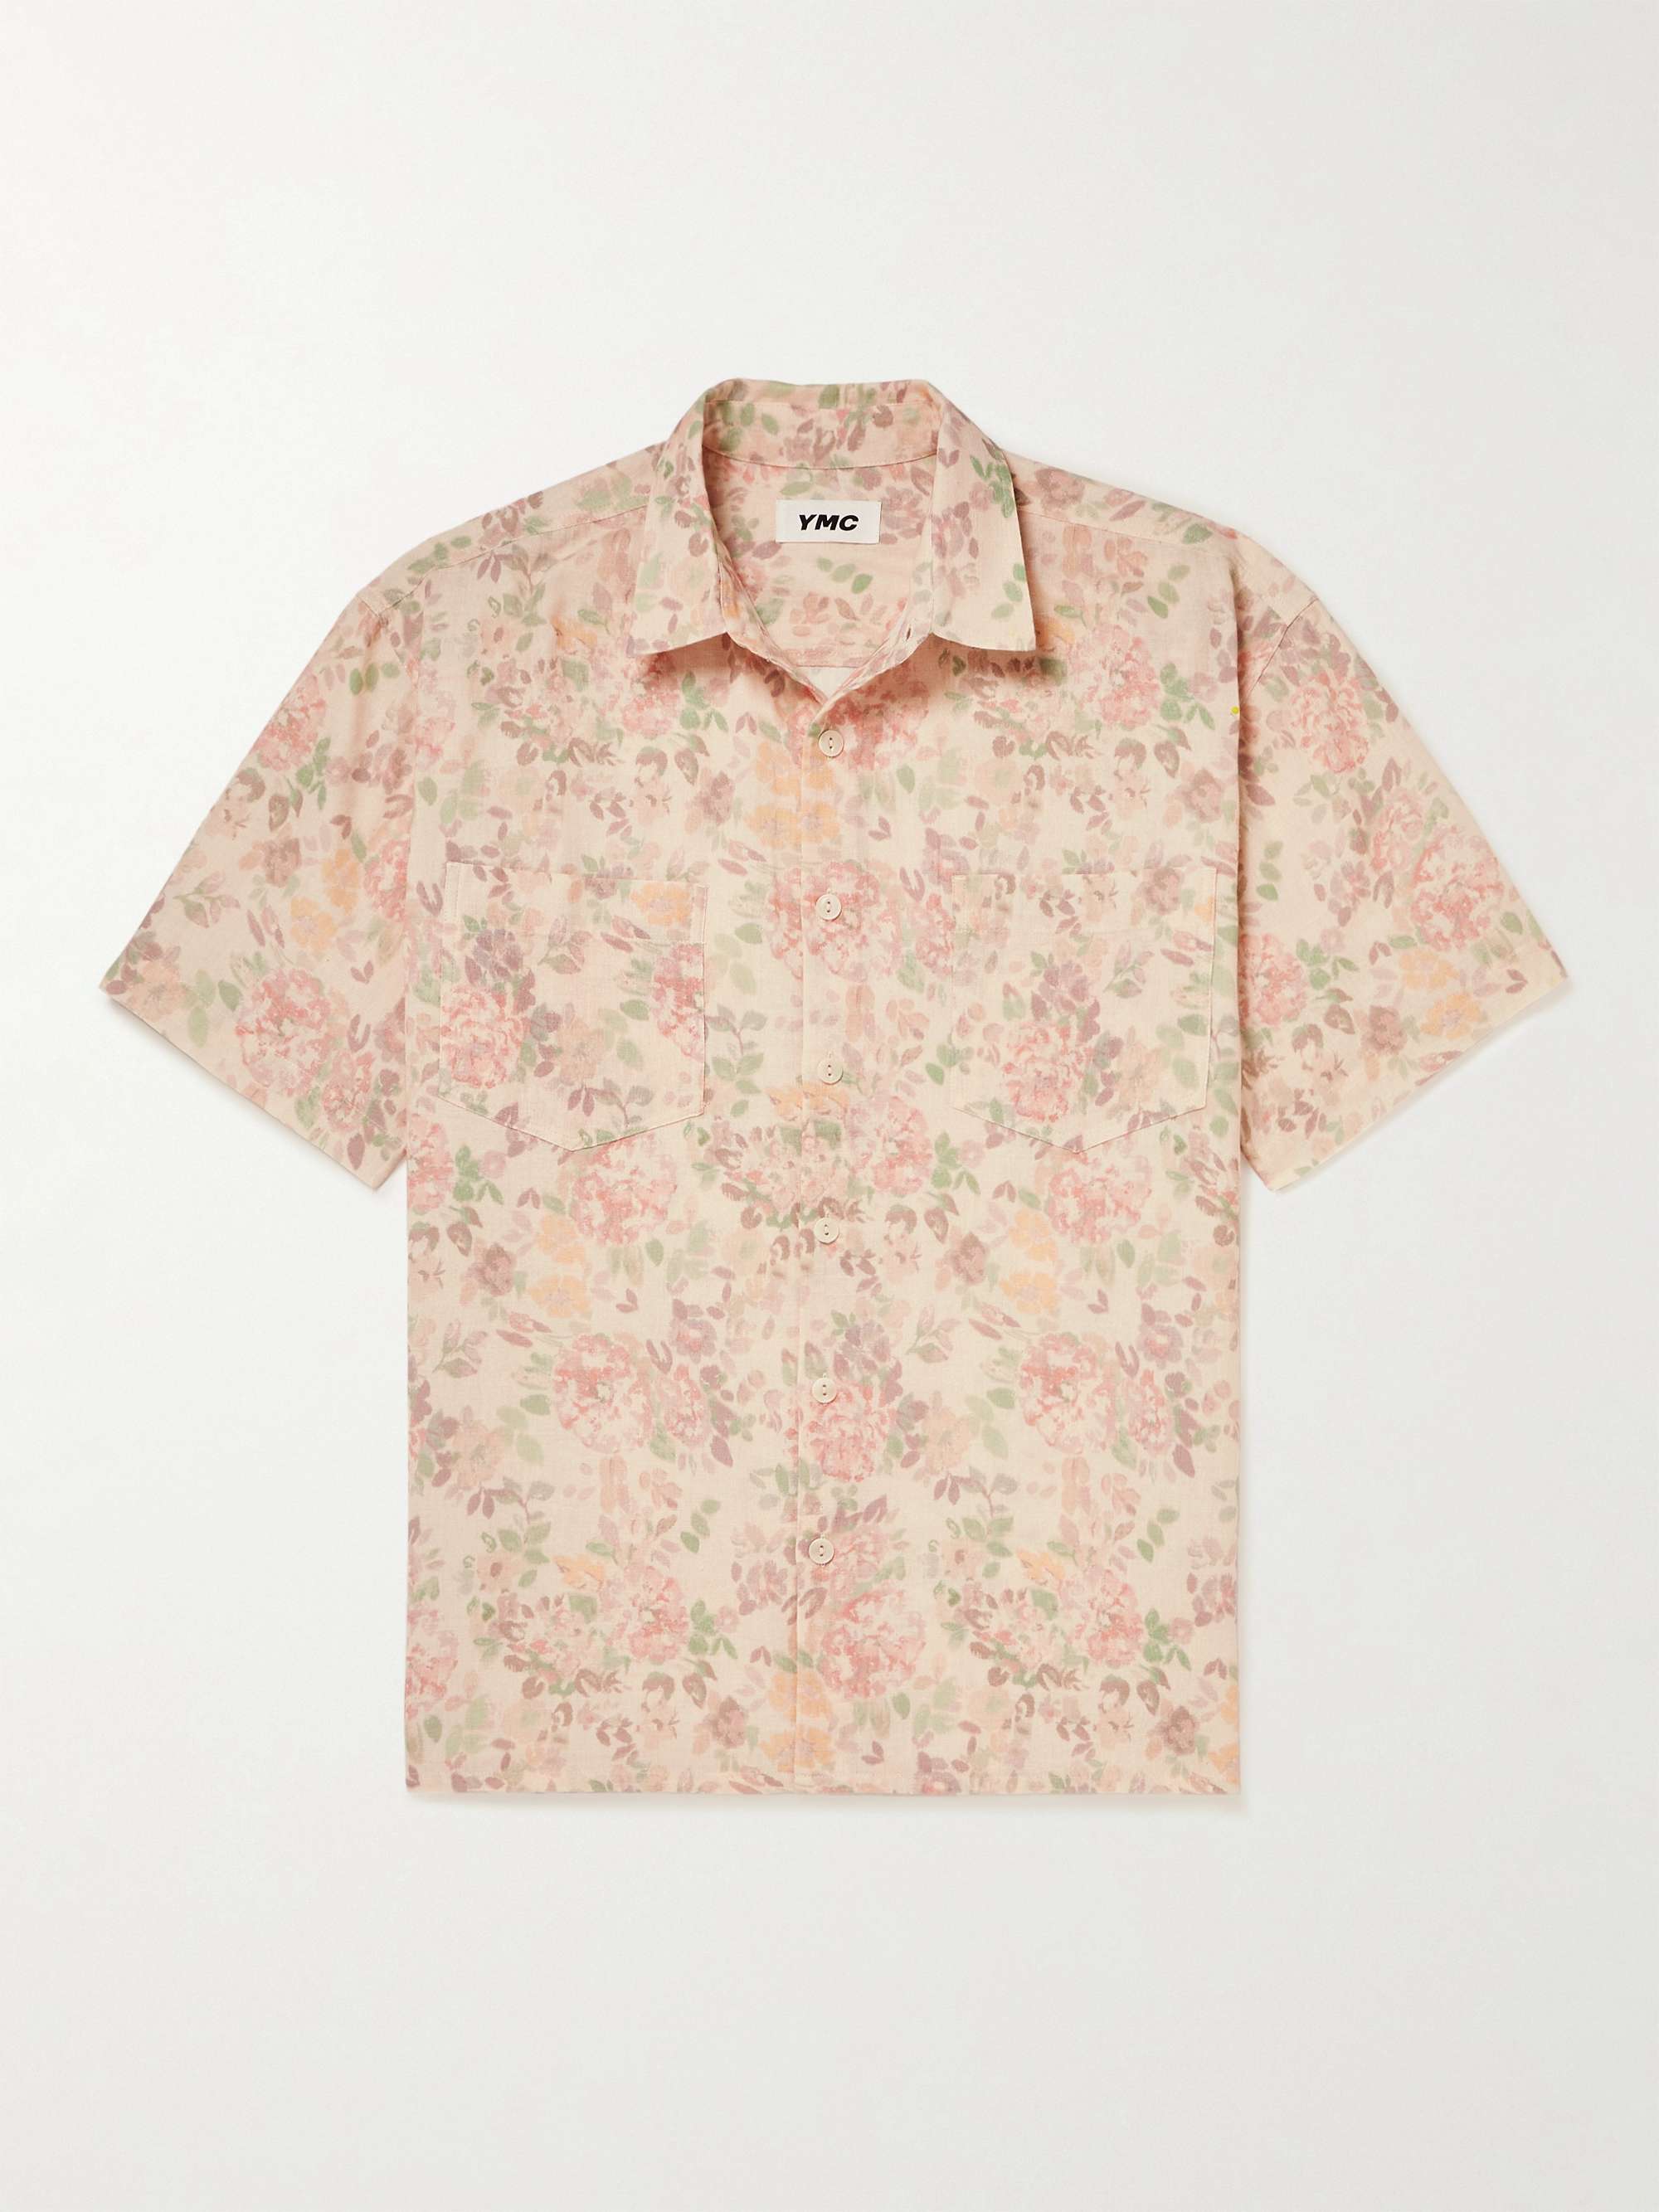 YMC Mitchum Floral-Print Cotton and Linen-Blend Shirt